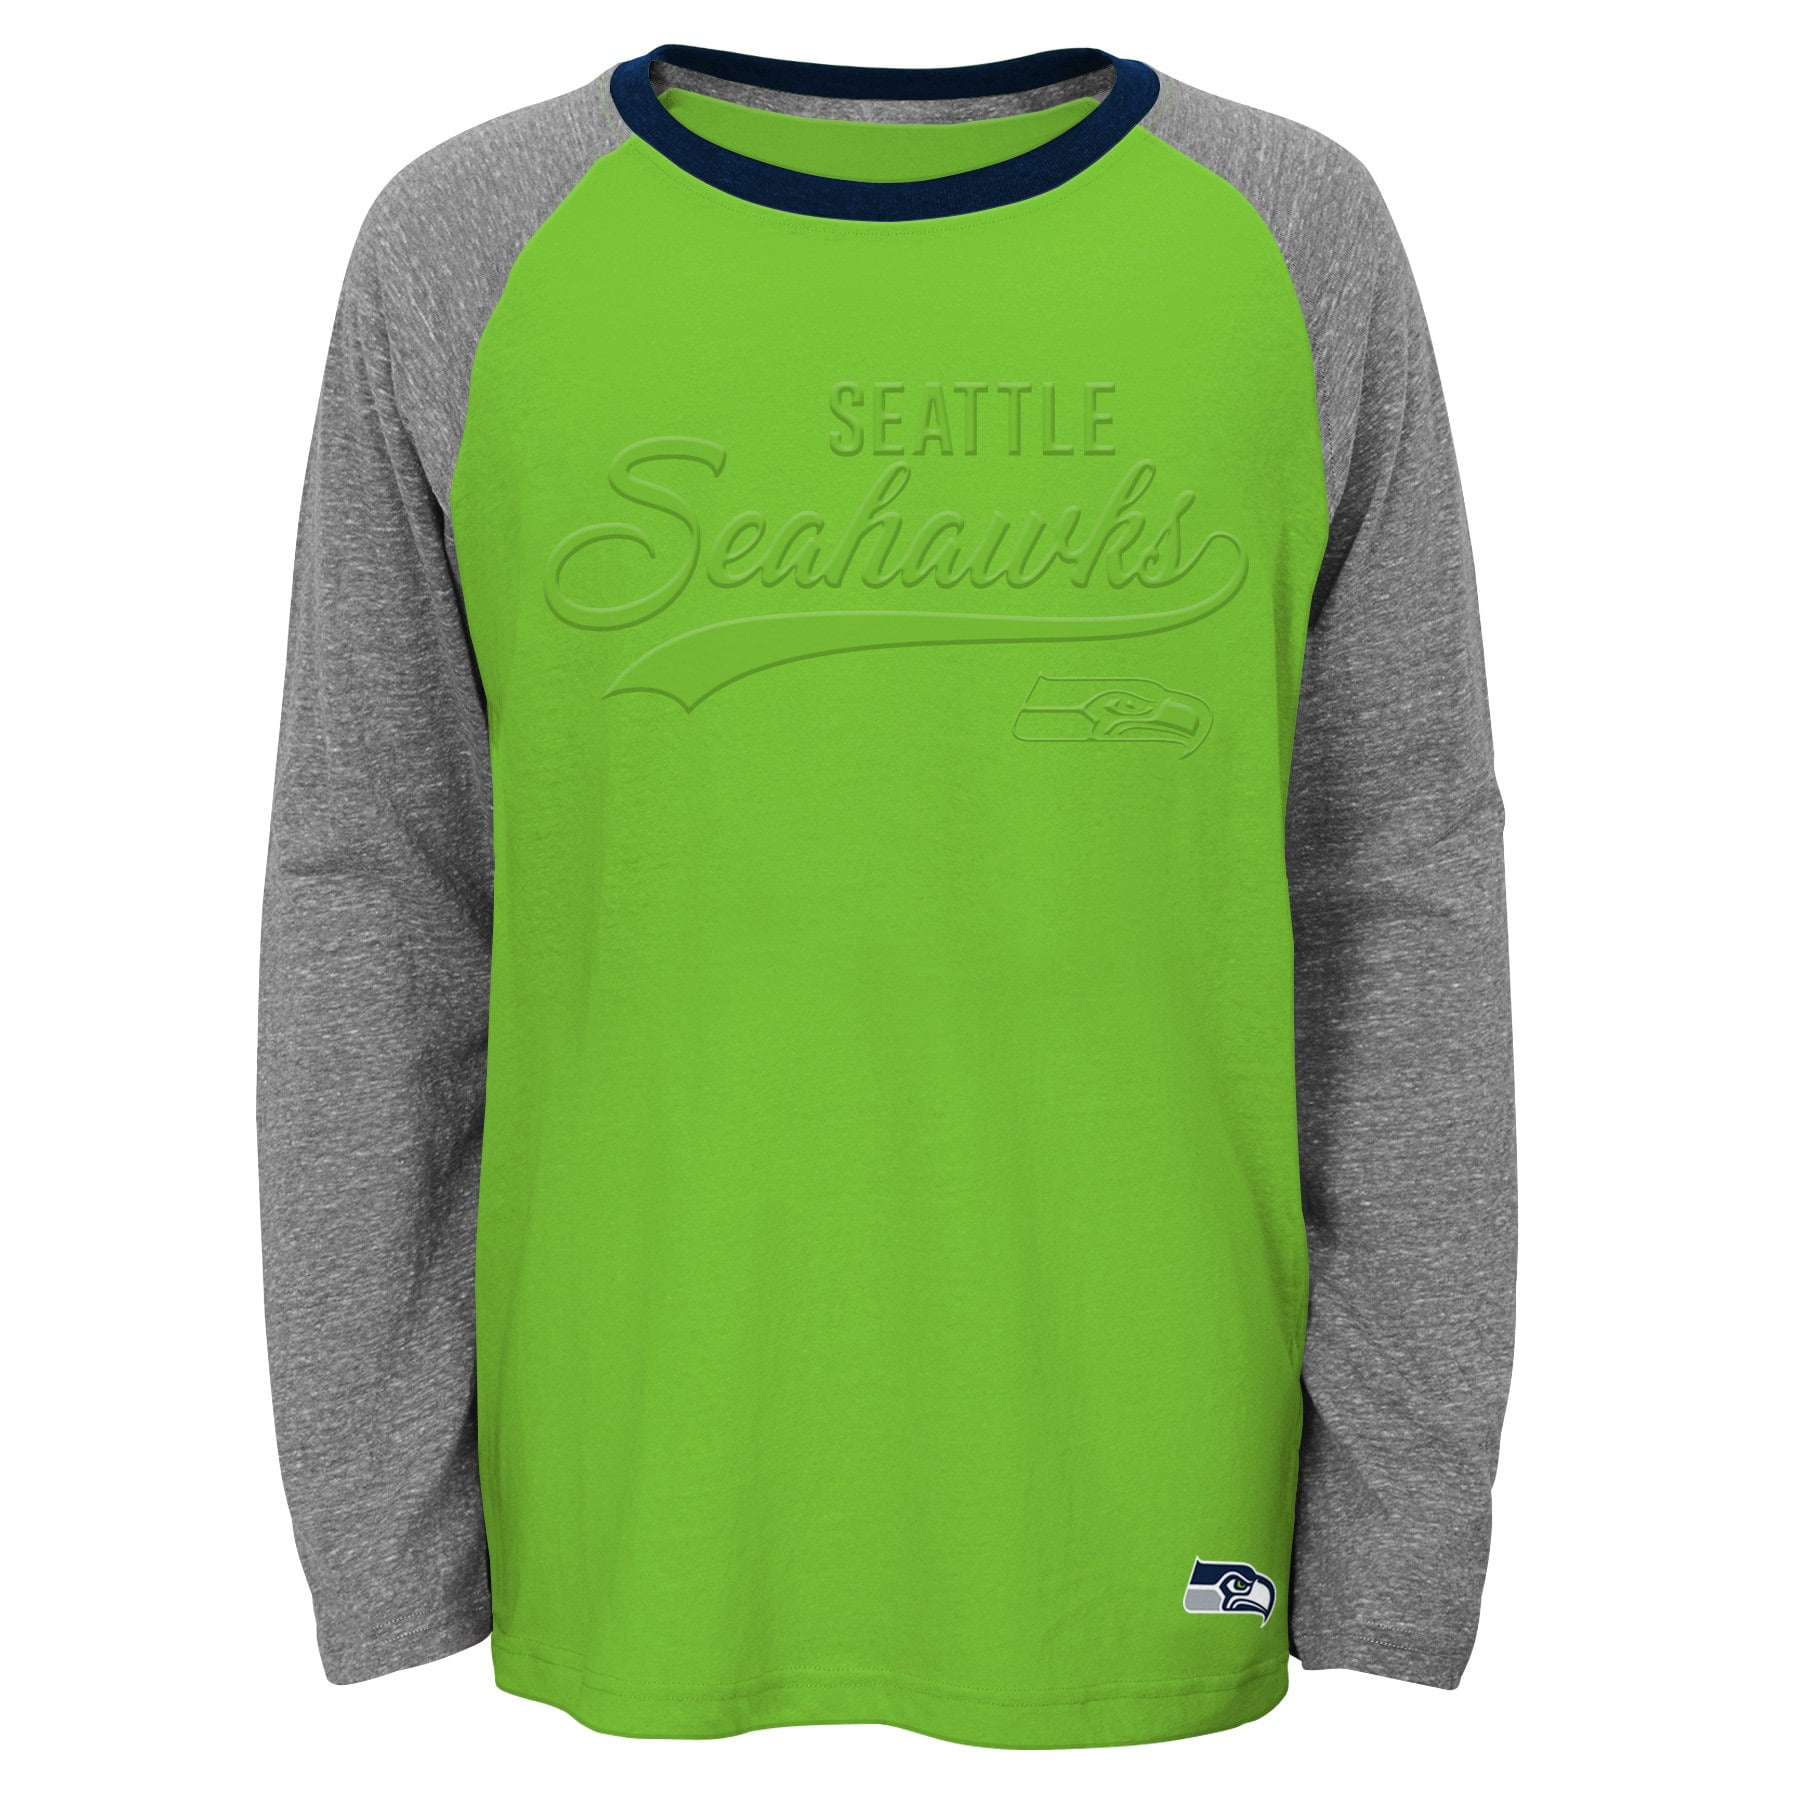 seattle seahawks long sleeve shirt